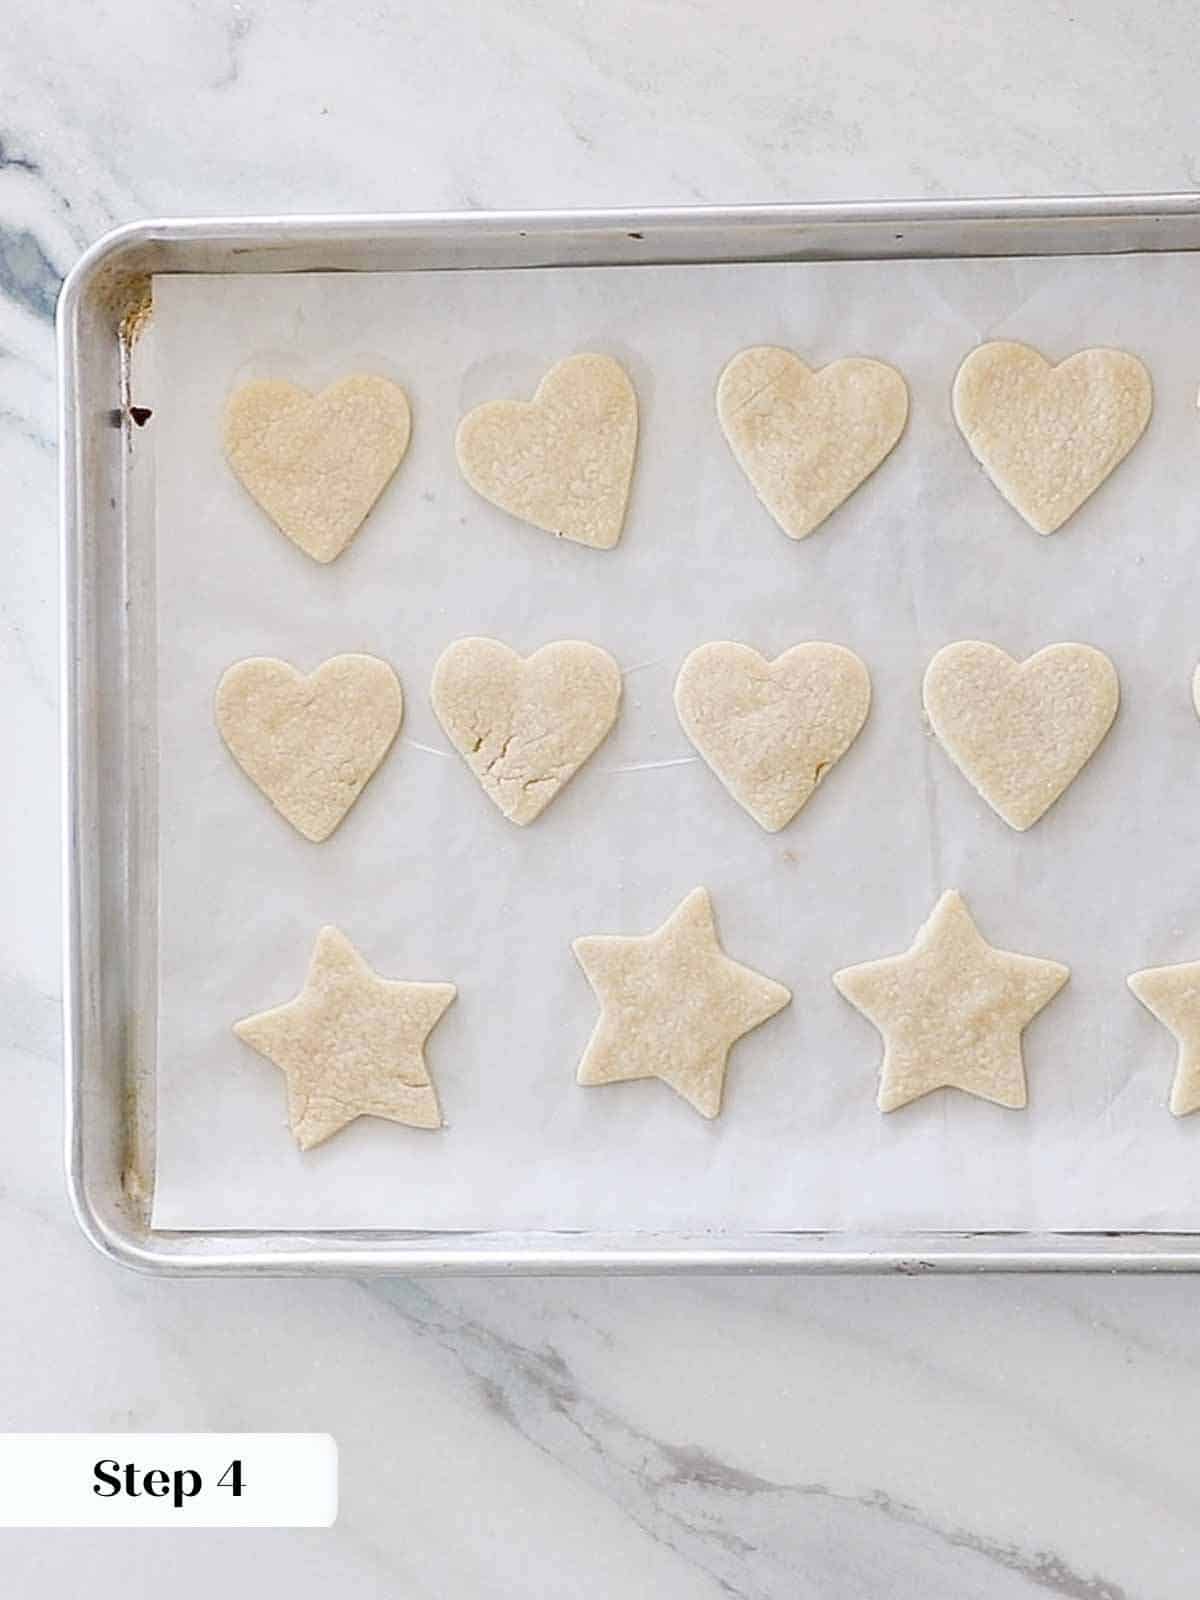 baked star shaped sugar cookies on baking sheet.